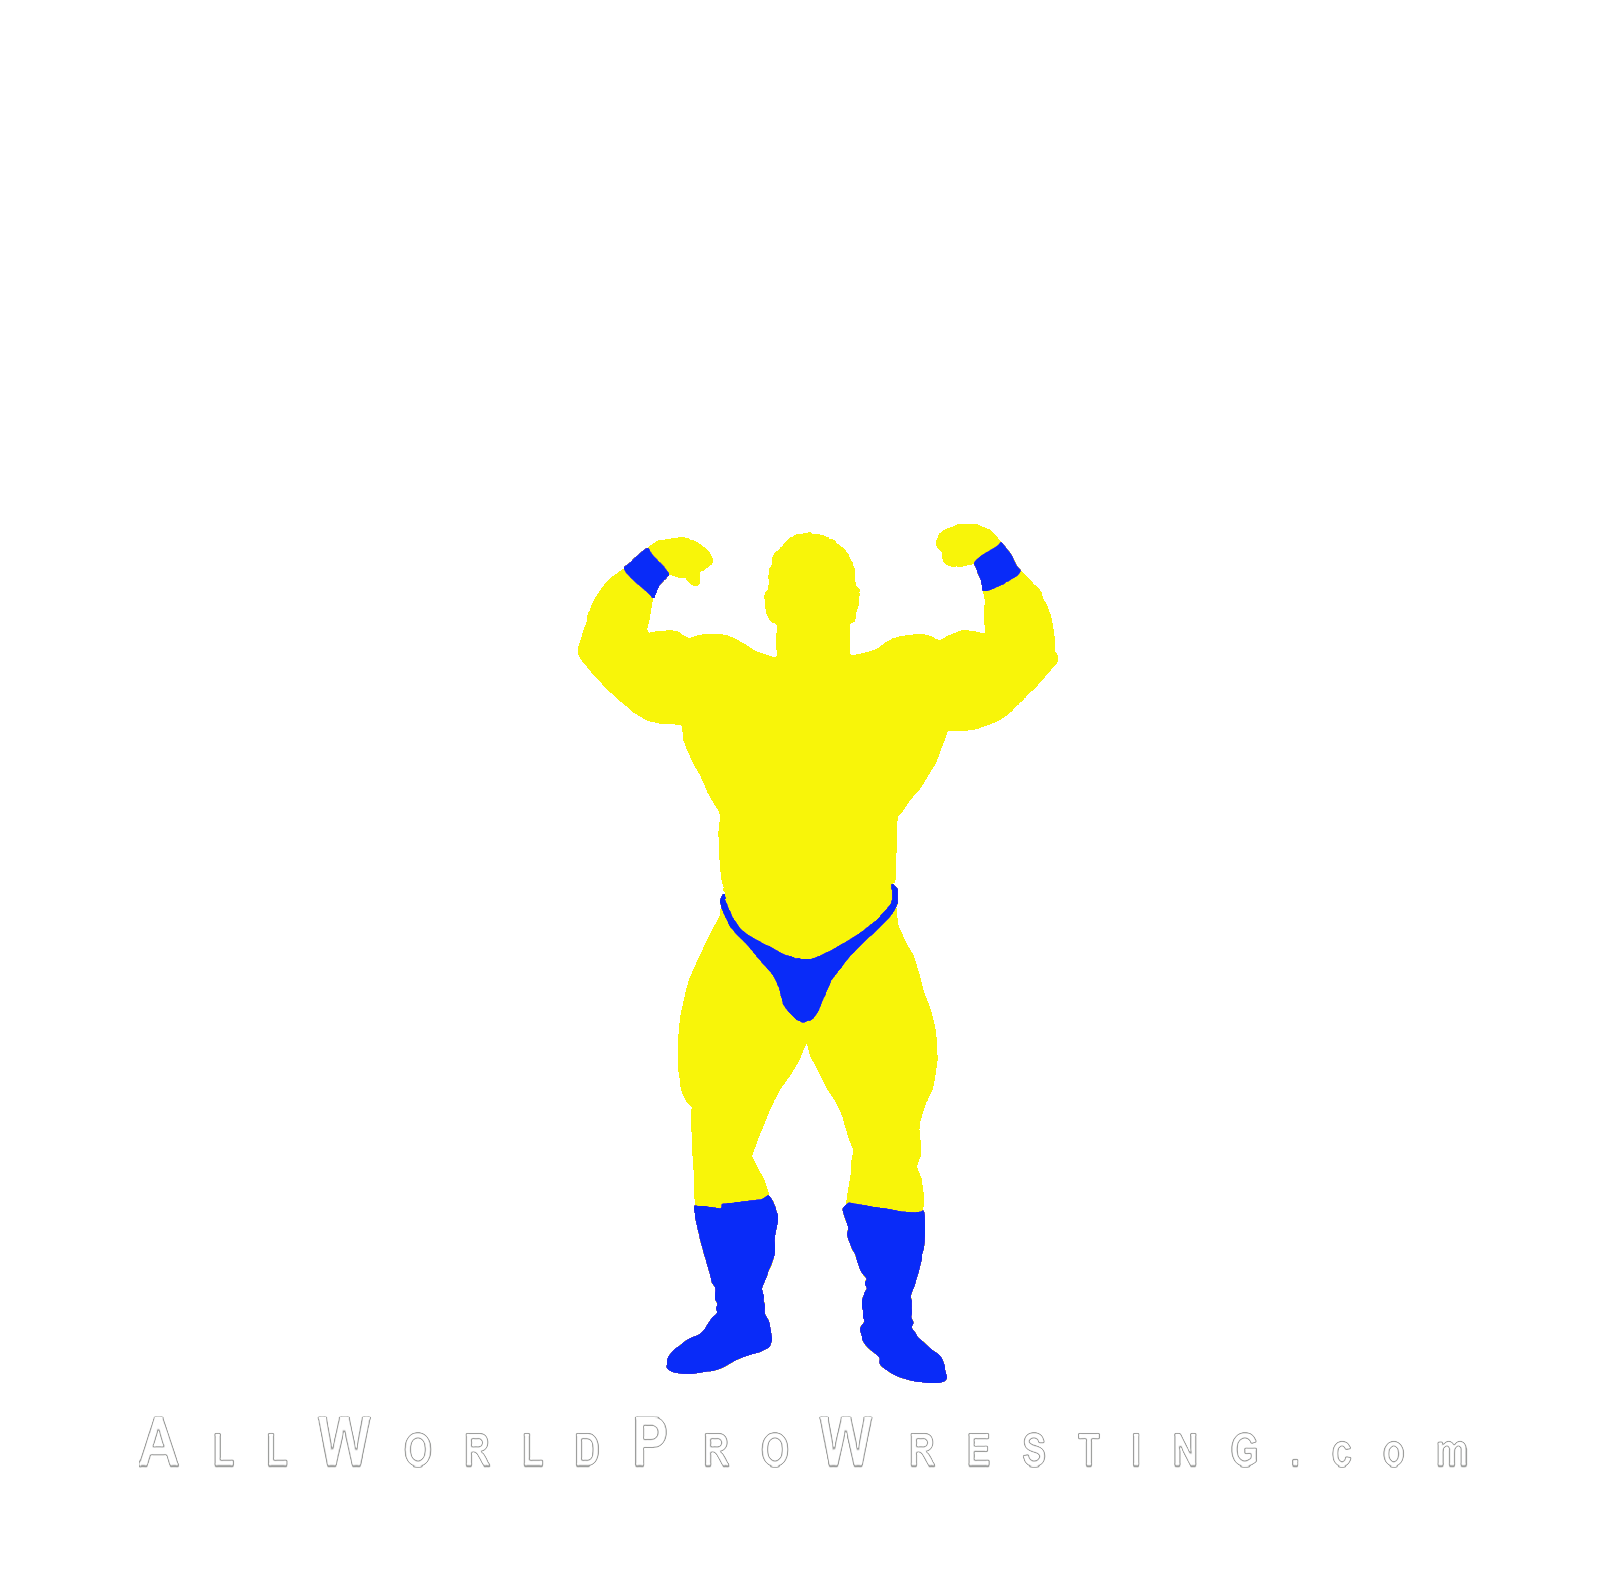 Gay Pro Wrestling, Pro Wrestling, All World Pro Wrestling, Interactive Novel, Choice Game